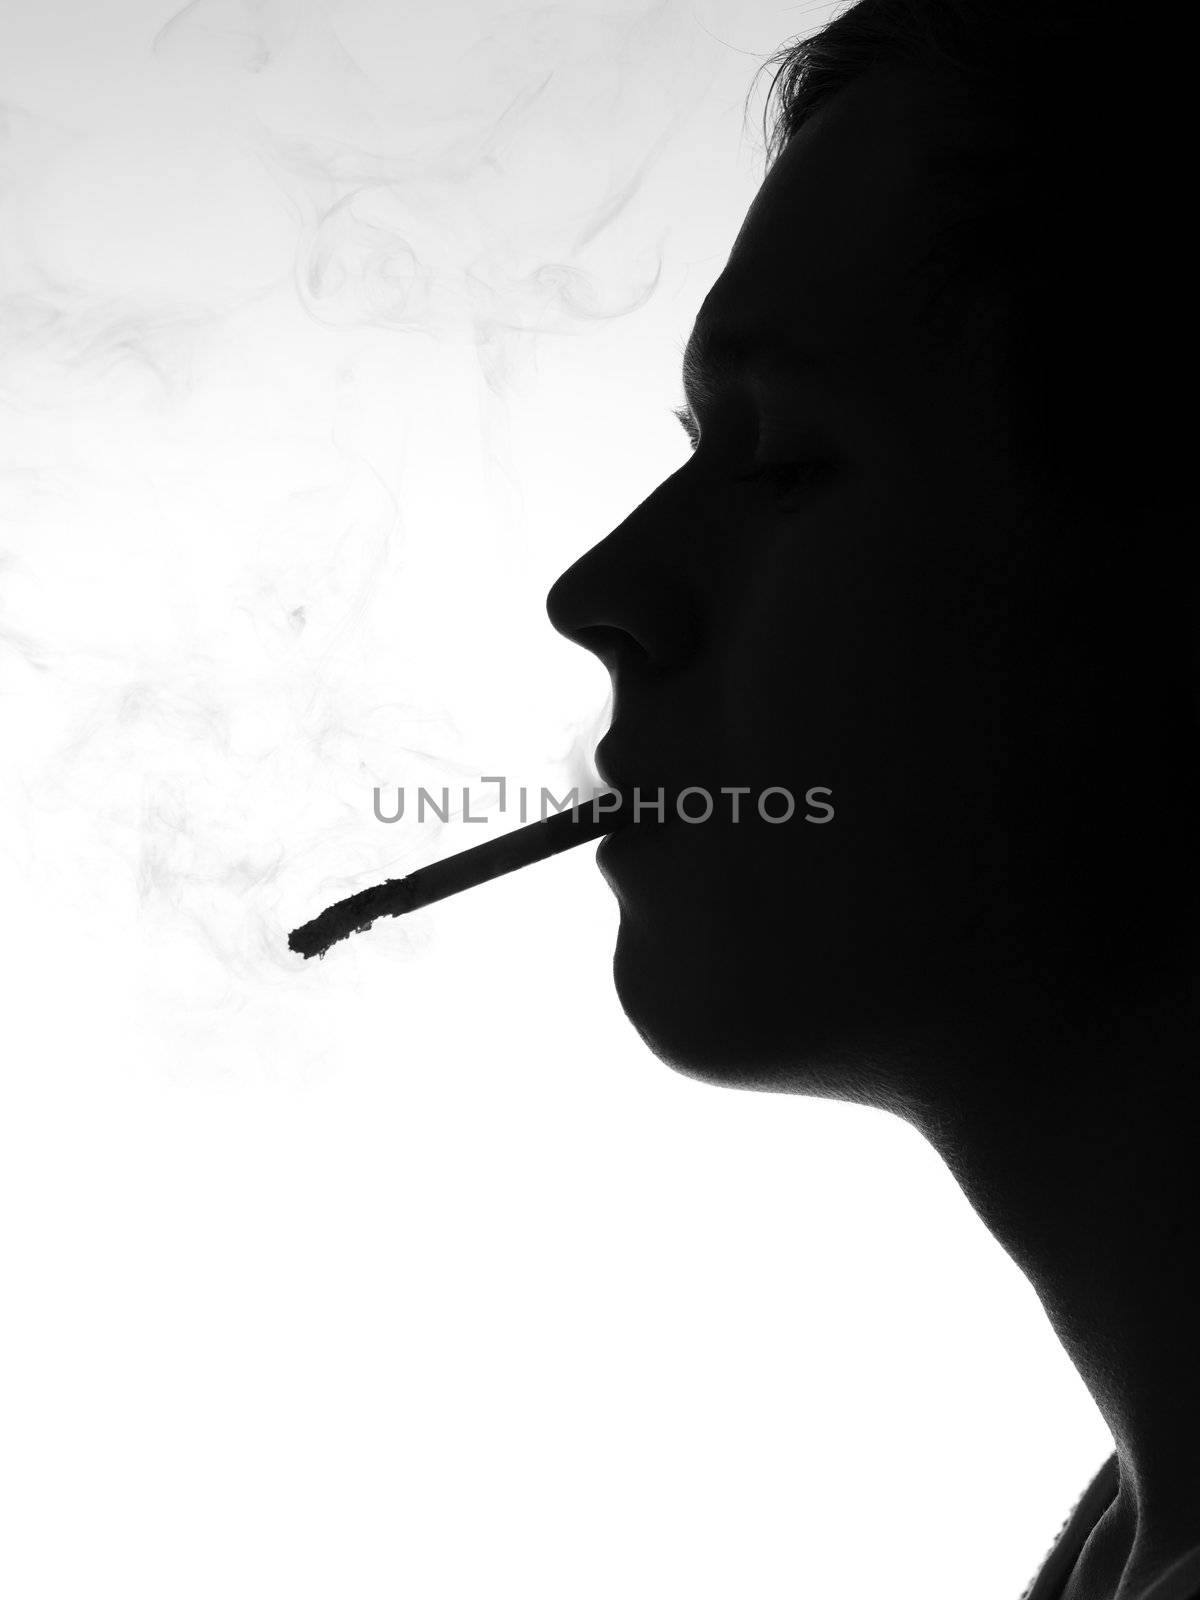 A man smokeing